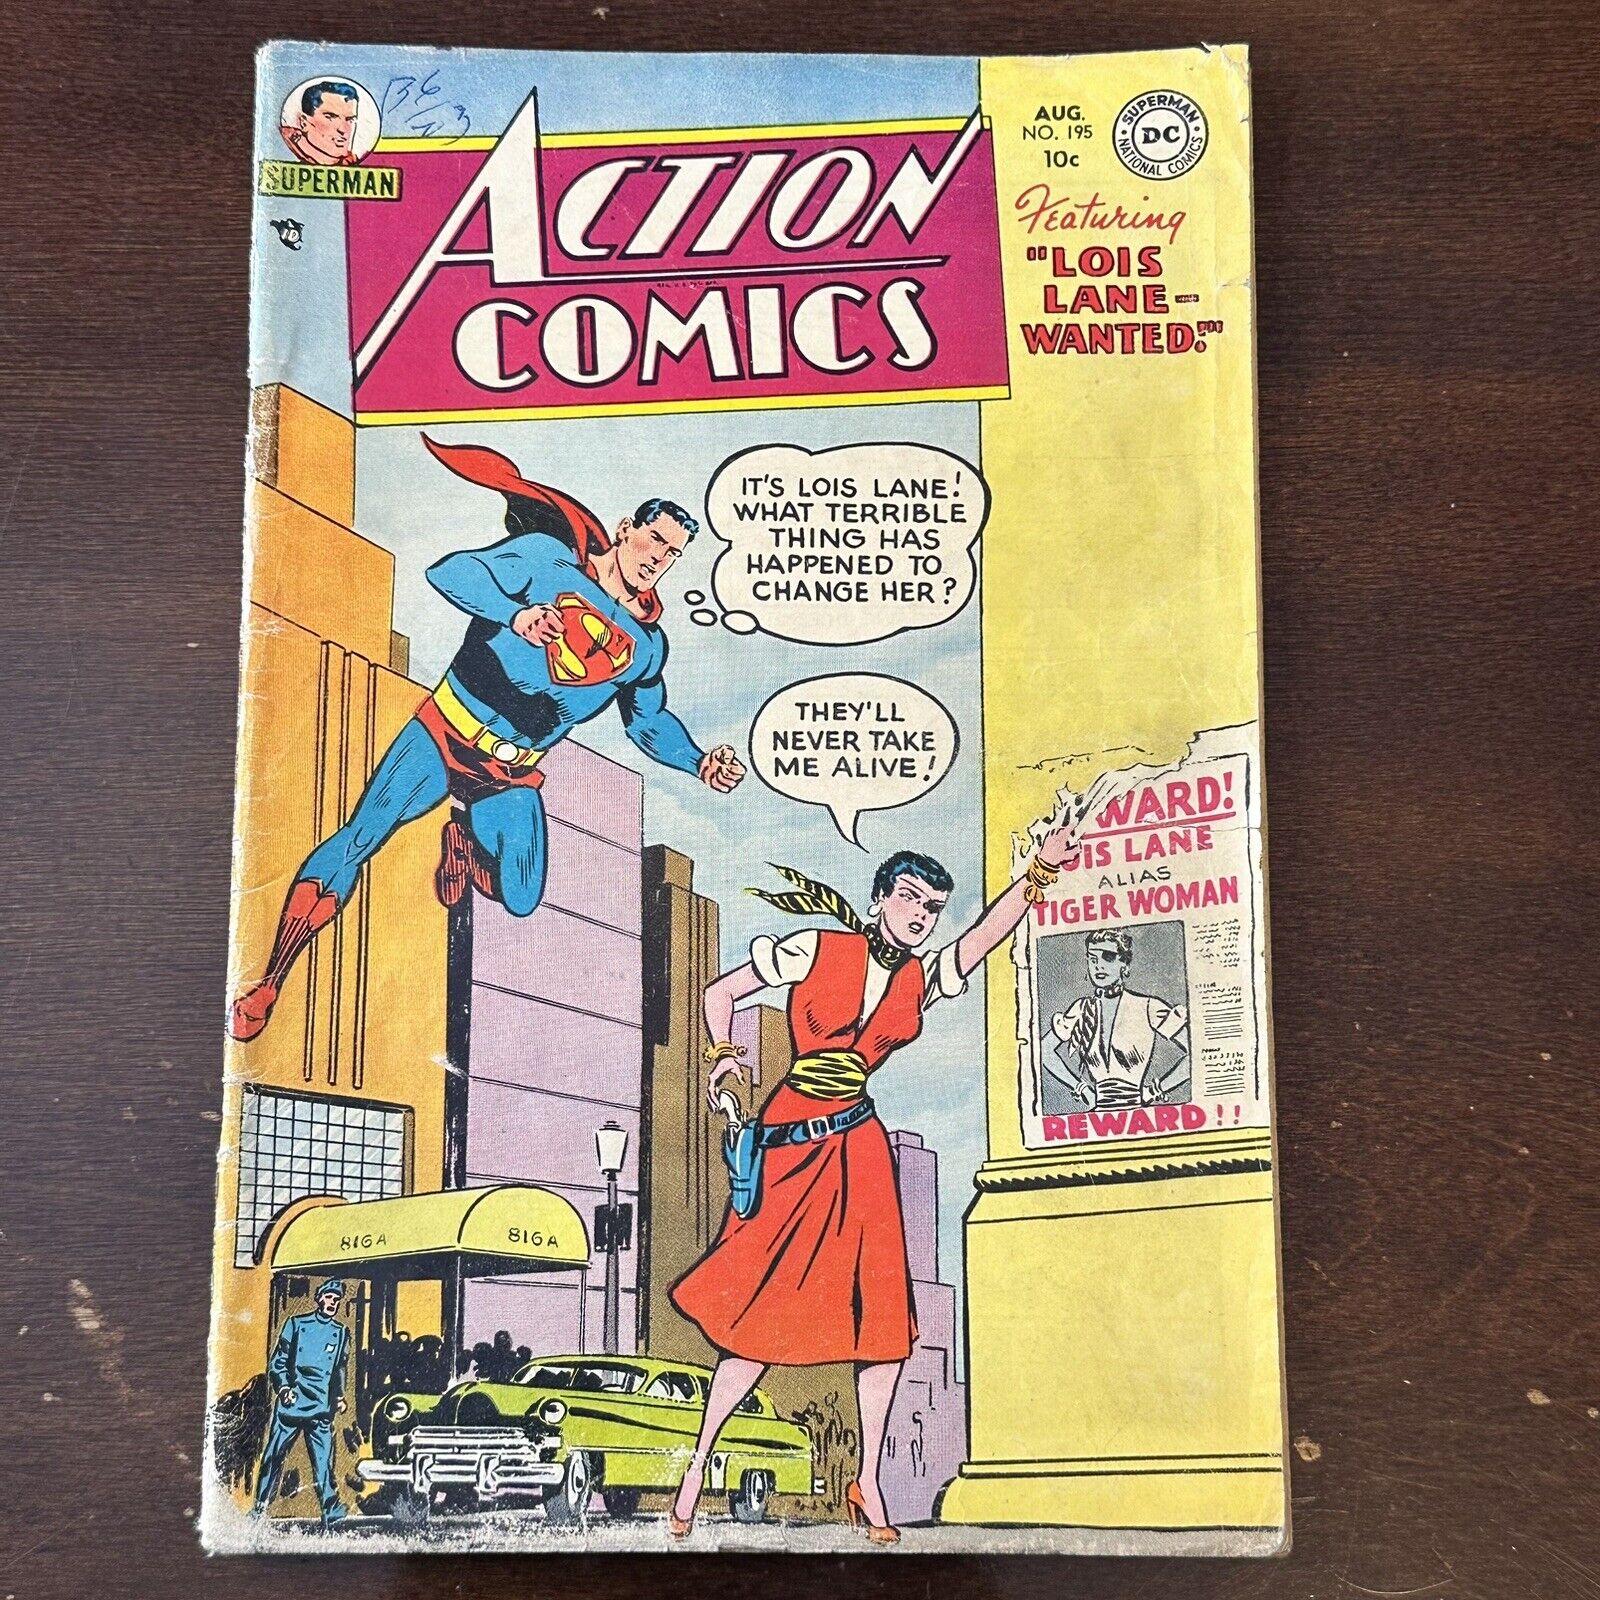 Action Comics #195 (1954) - Superman and Lois Lane